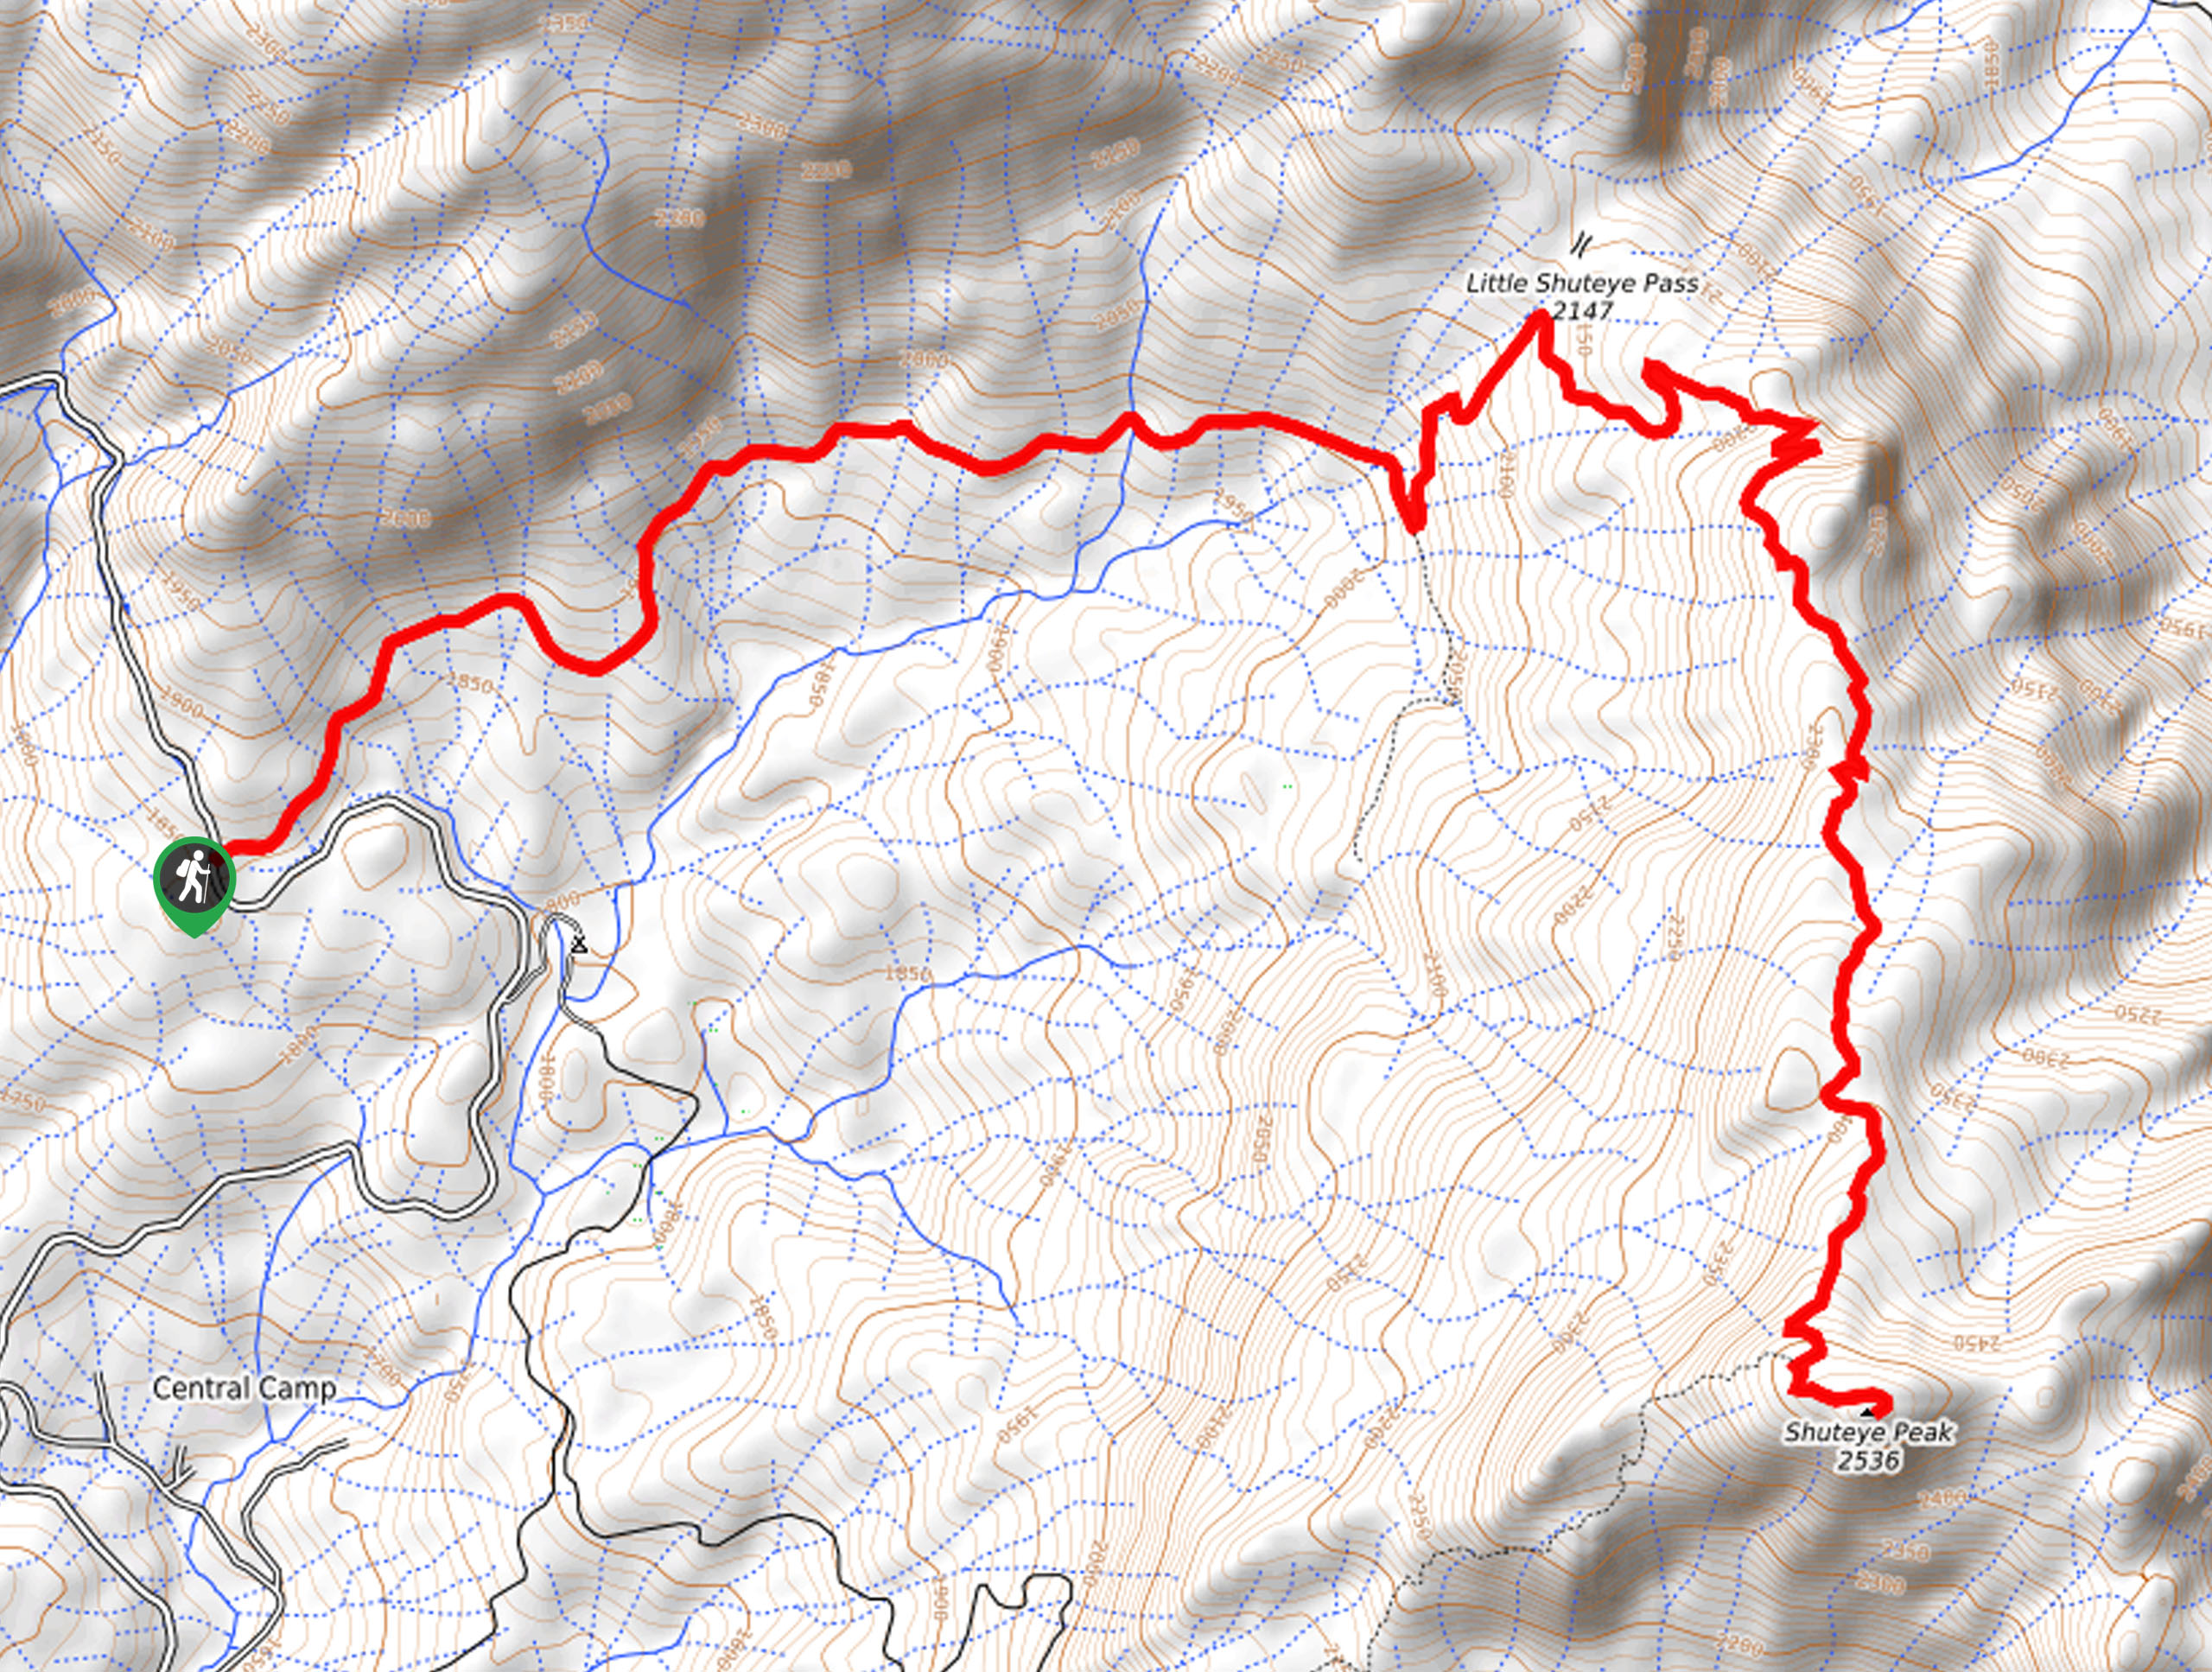 Shuteye Peak Trail Map